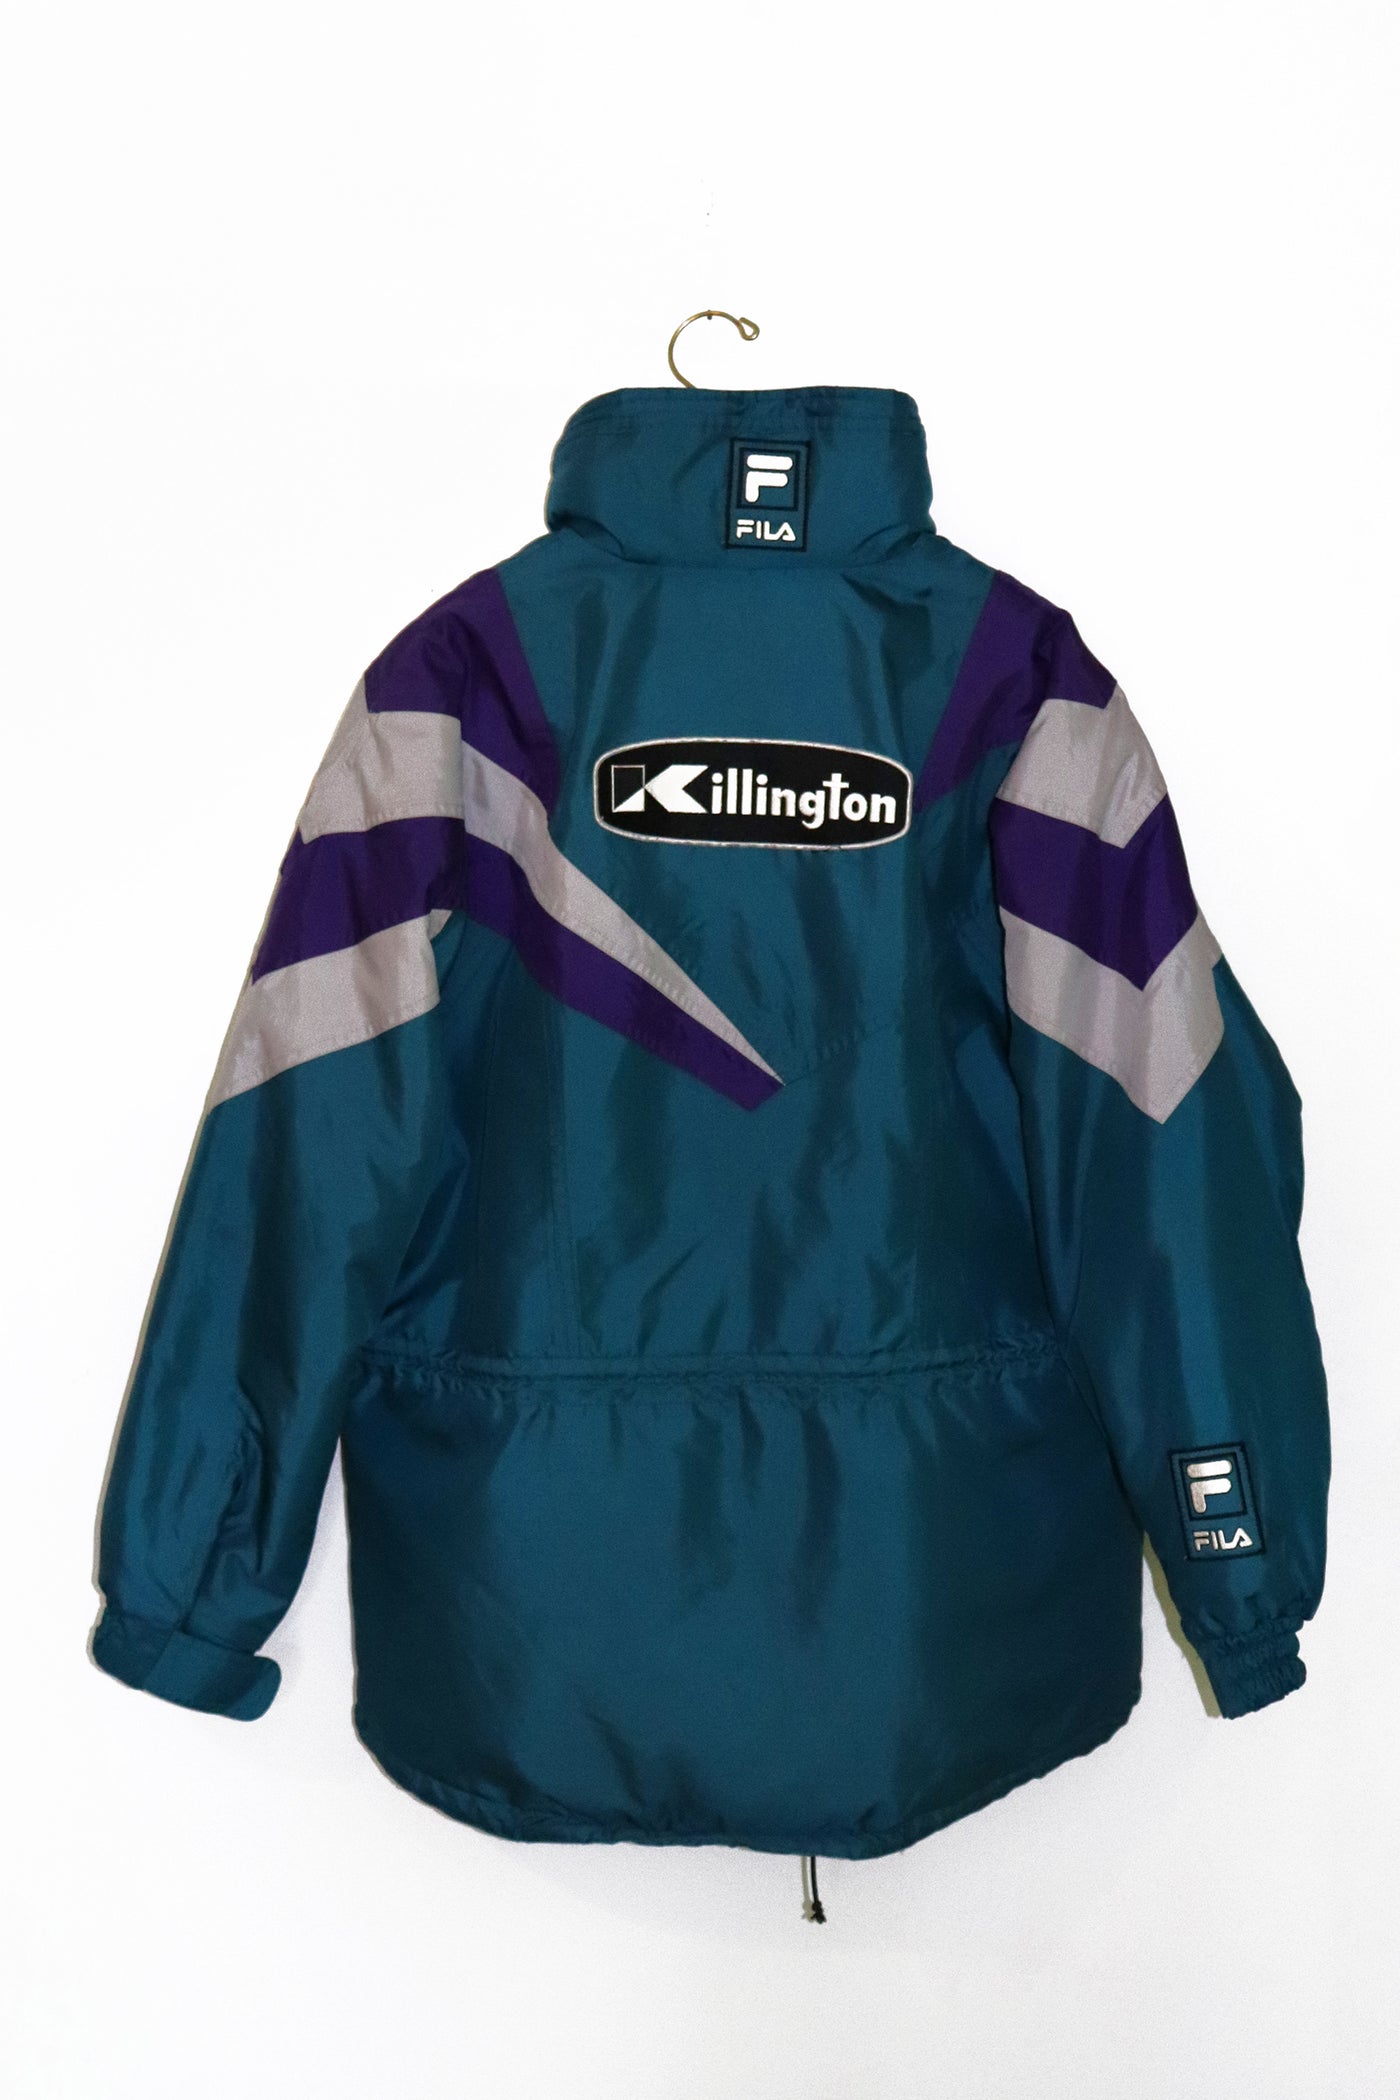 Vintage 90s FILA Ski Jacket